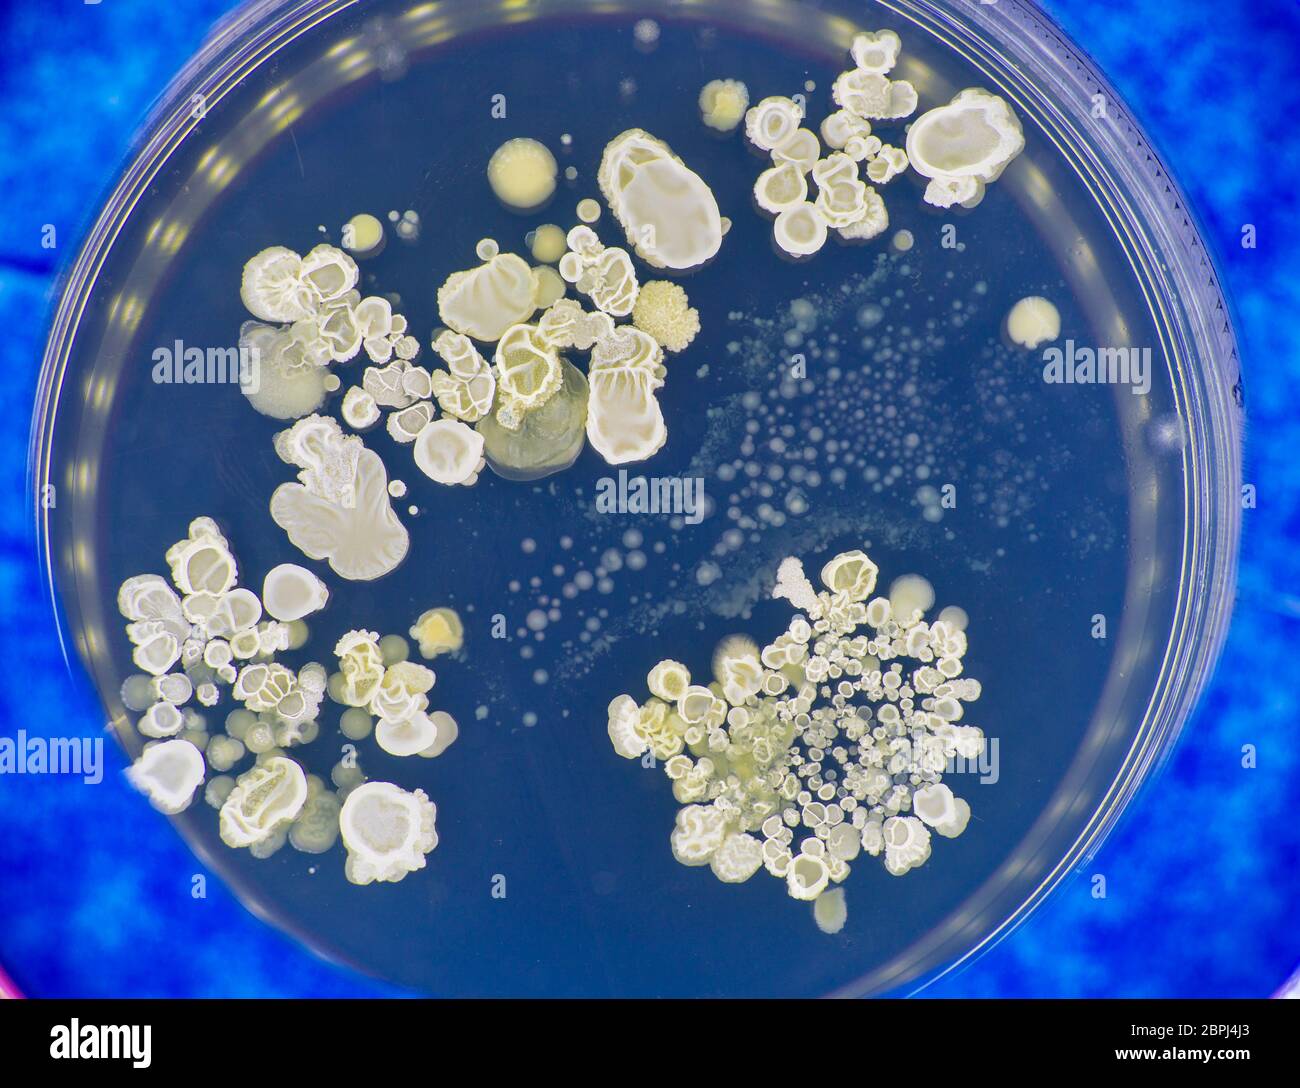 Tests for skin fungal diseases. Samples of fungus causing skin diseases grown in a petri dish Stock Photo